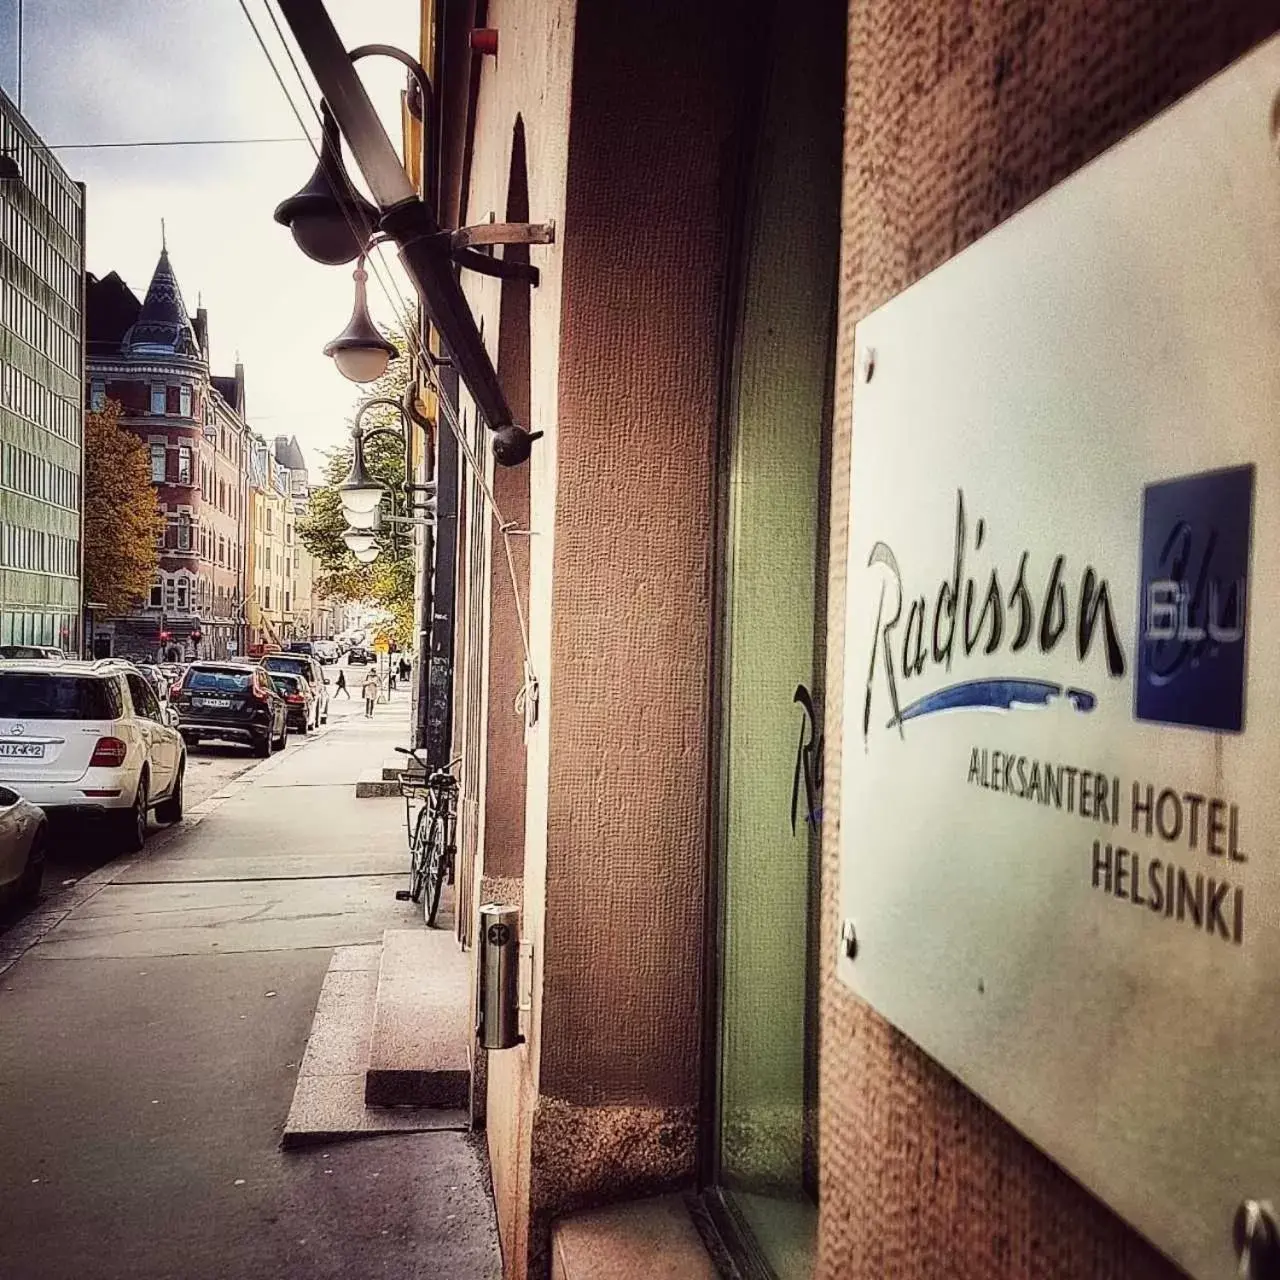 Property logo or sign in Radisson Blu Aleksanteri Hotel, Helsinki